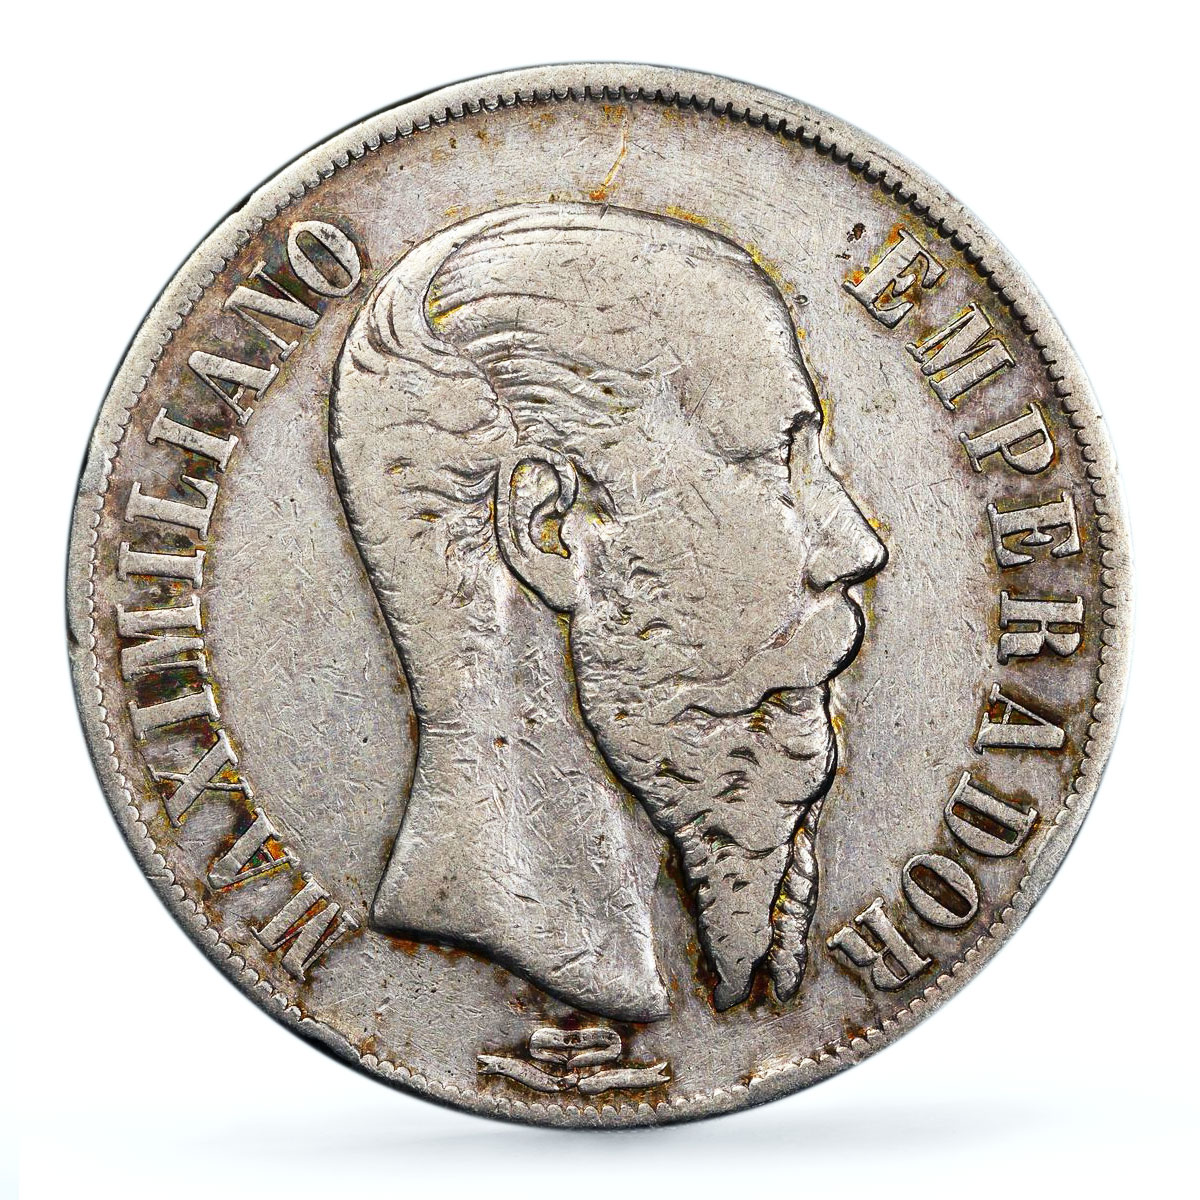 Mexico 1 peso Maximilian Maximiliano I KM-388.1 VF25 PCGS silver coin 1867